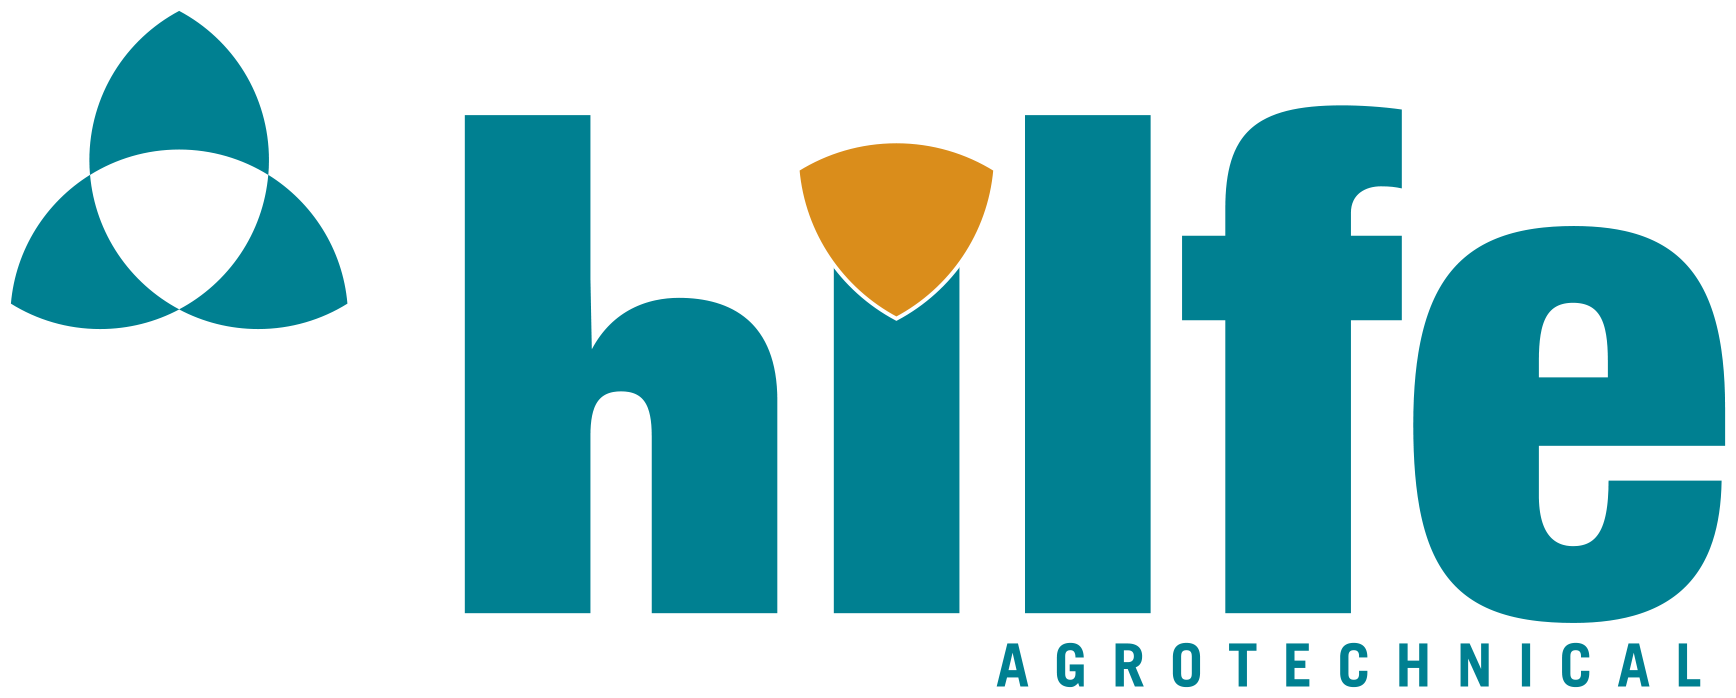 hilfe agrotechnical logo 020818